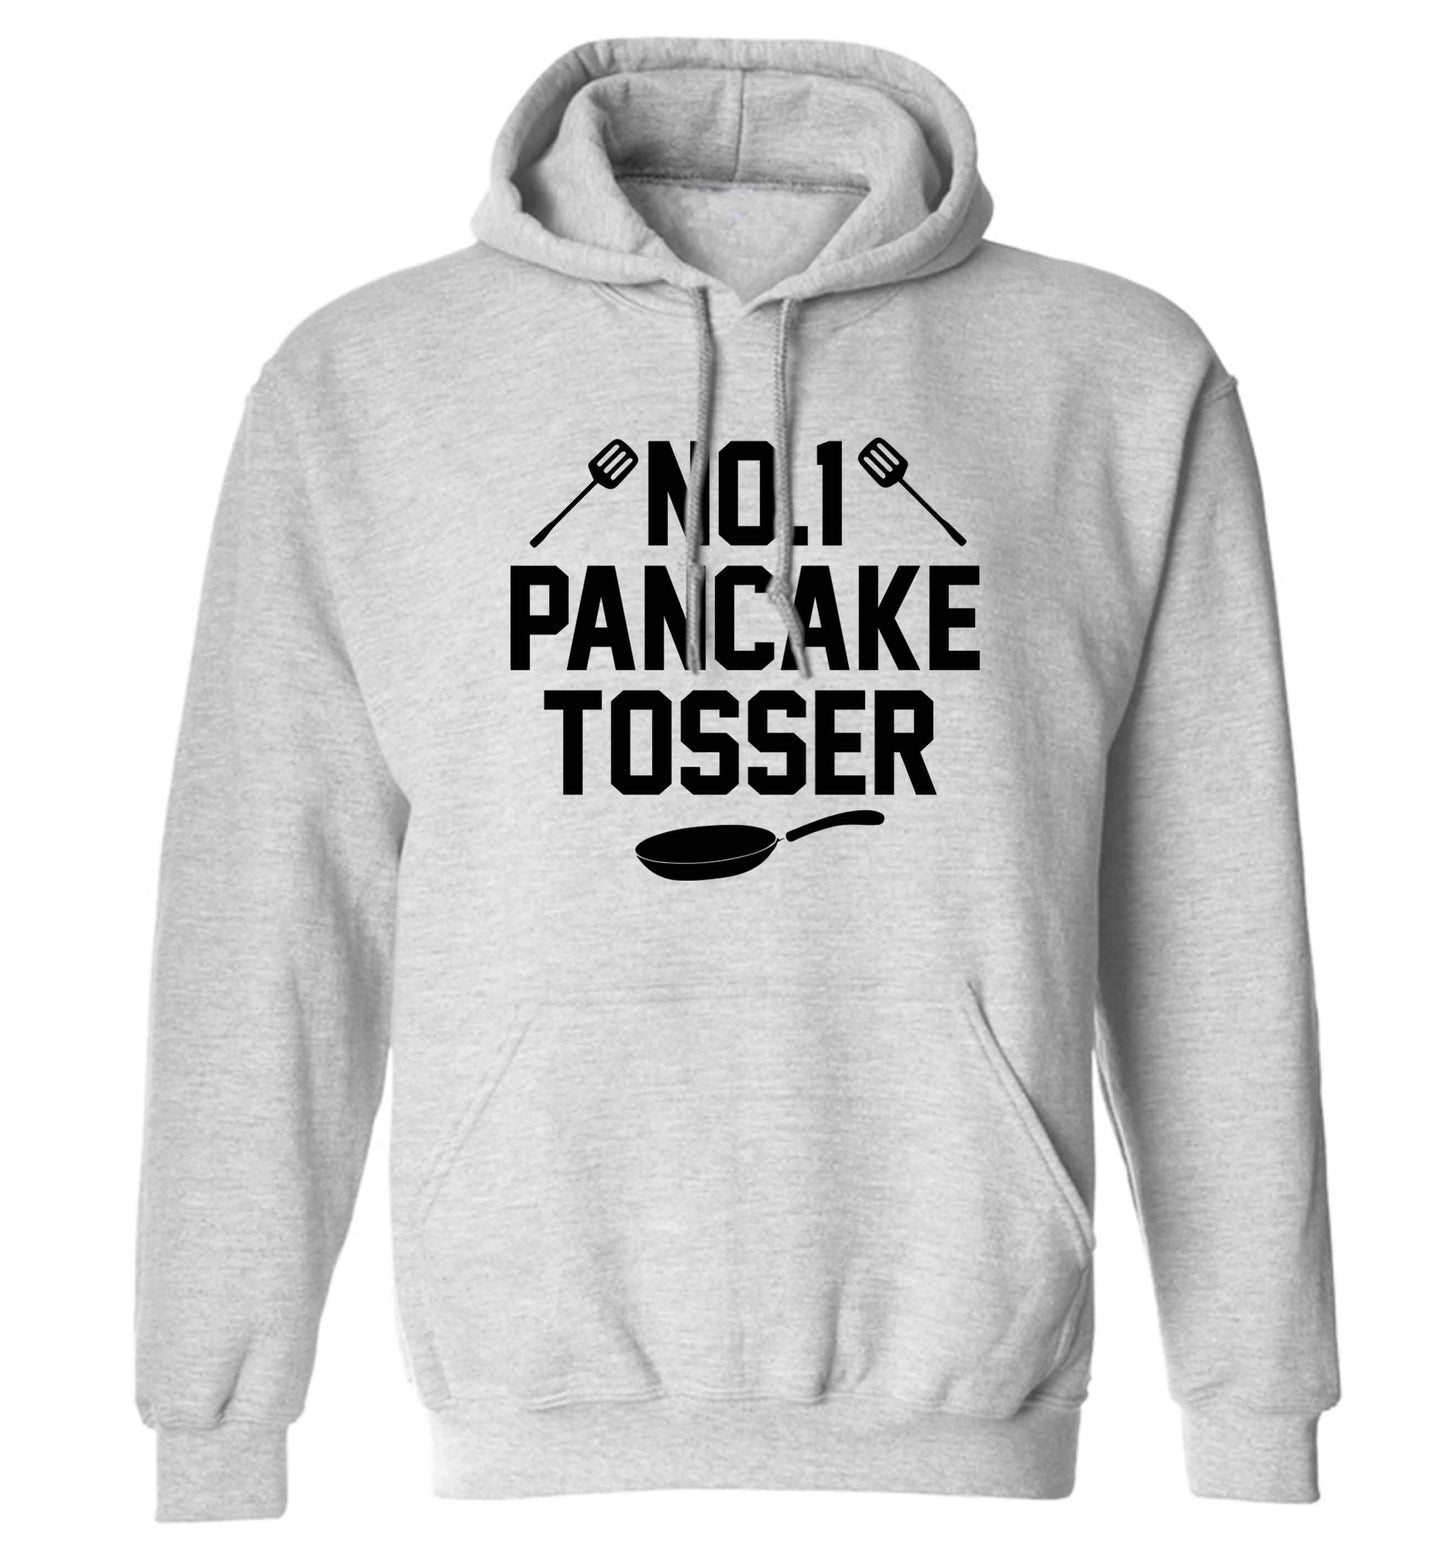 No.1 Pancake tosser adults unisex grey hoodie 2XL